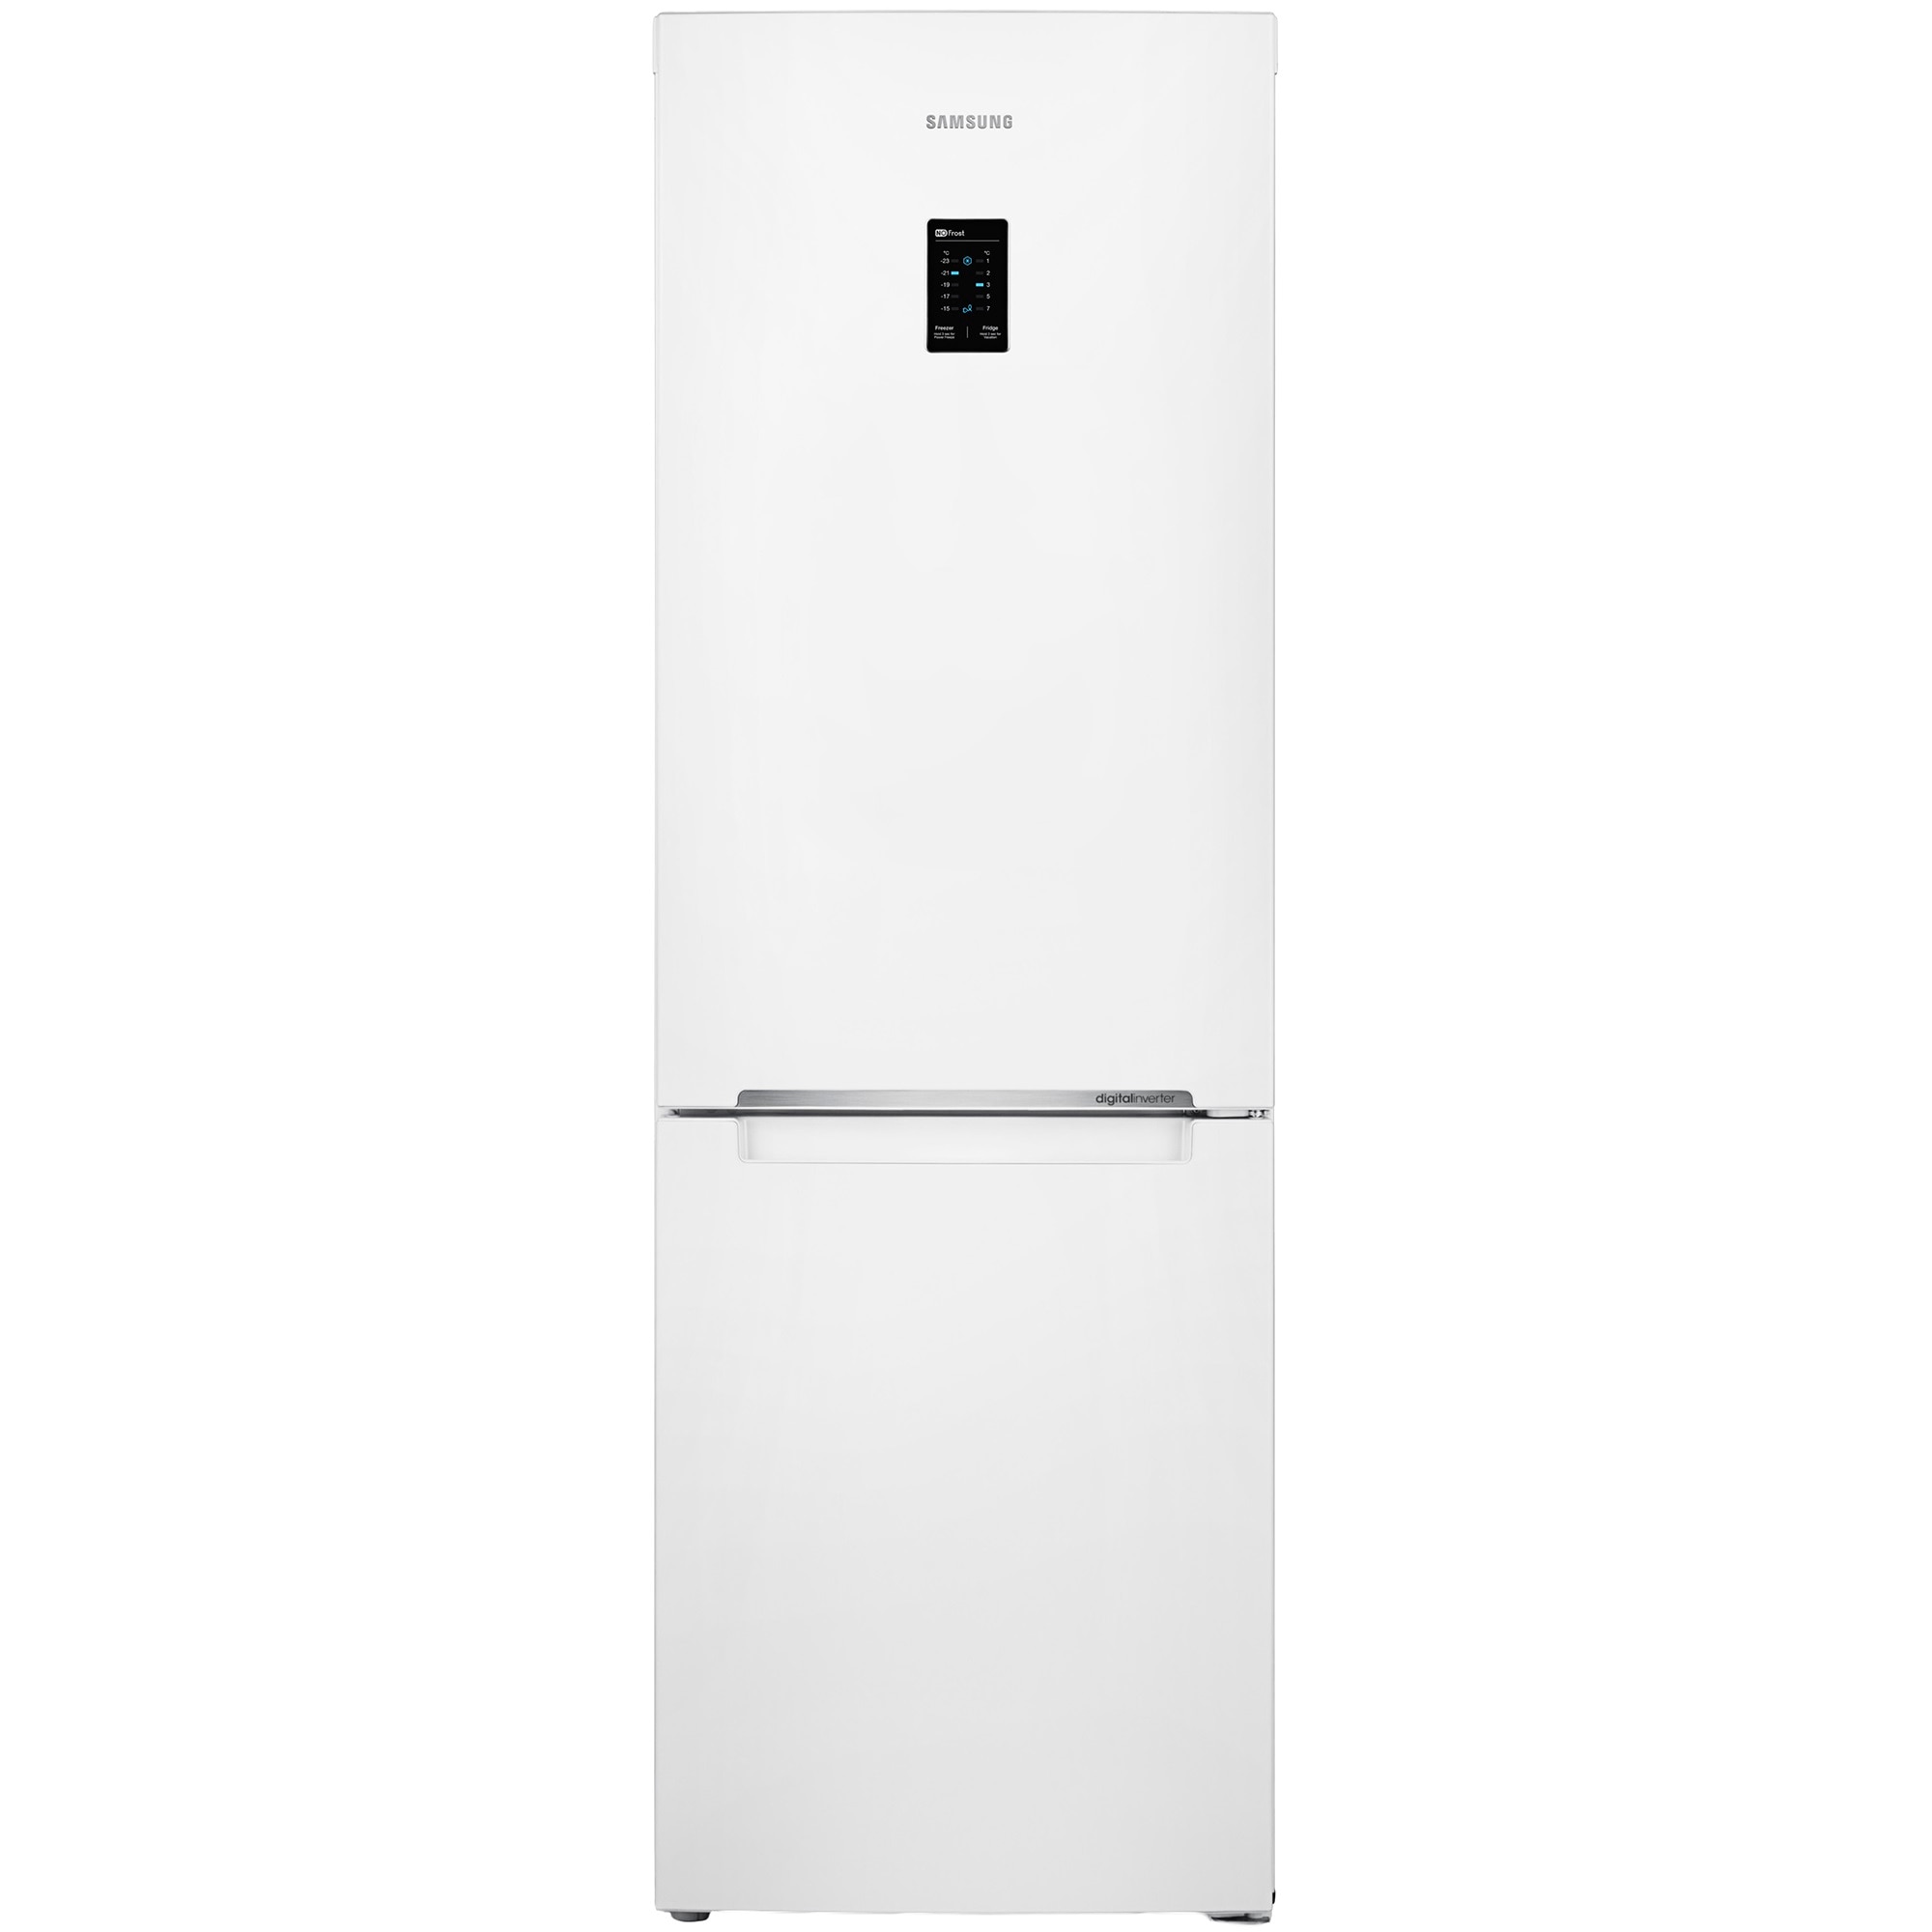 Хладилник Samsung RB31FERNDWW с обем от 310 л.